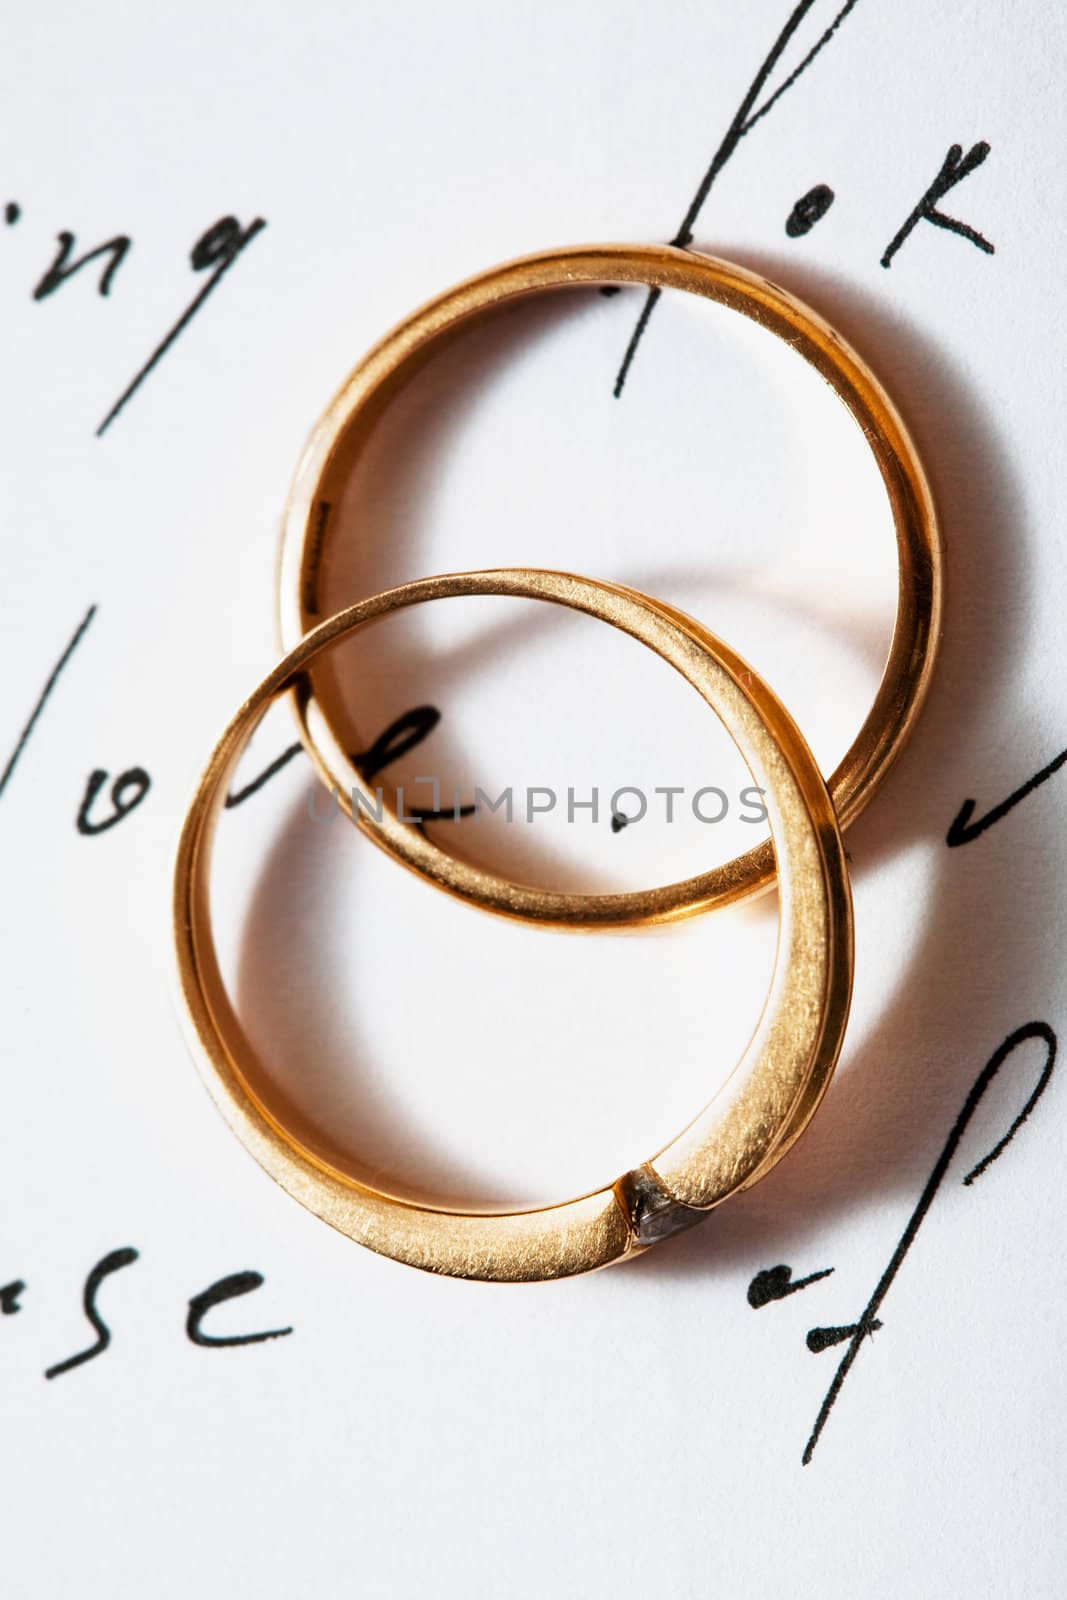 Two rings by velkol